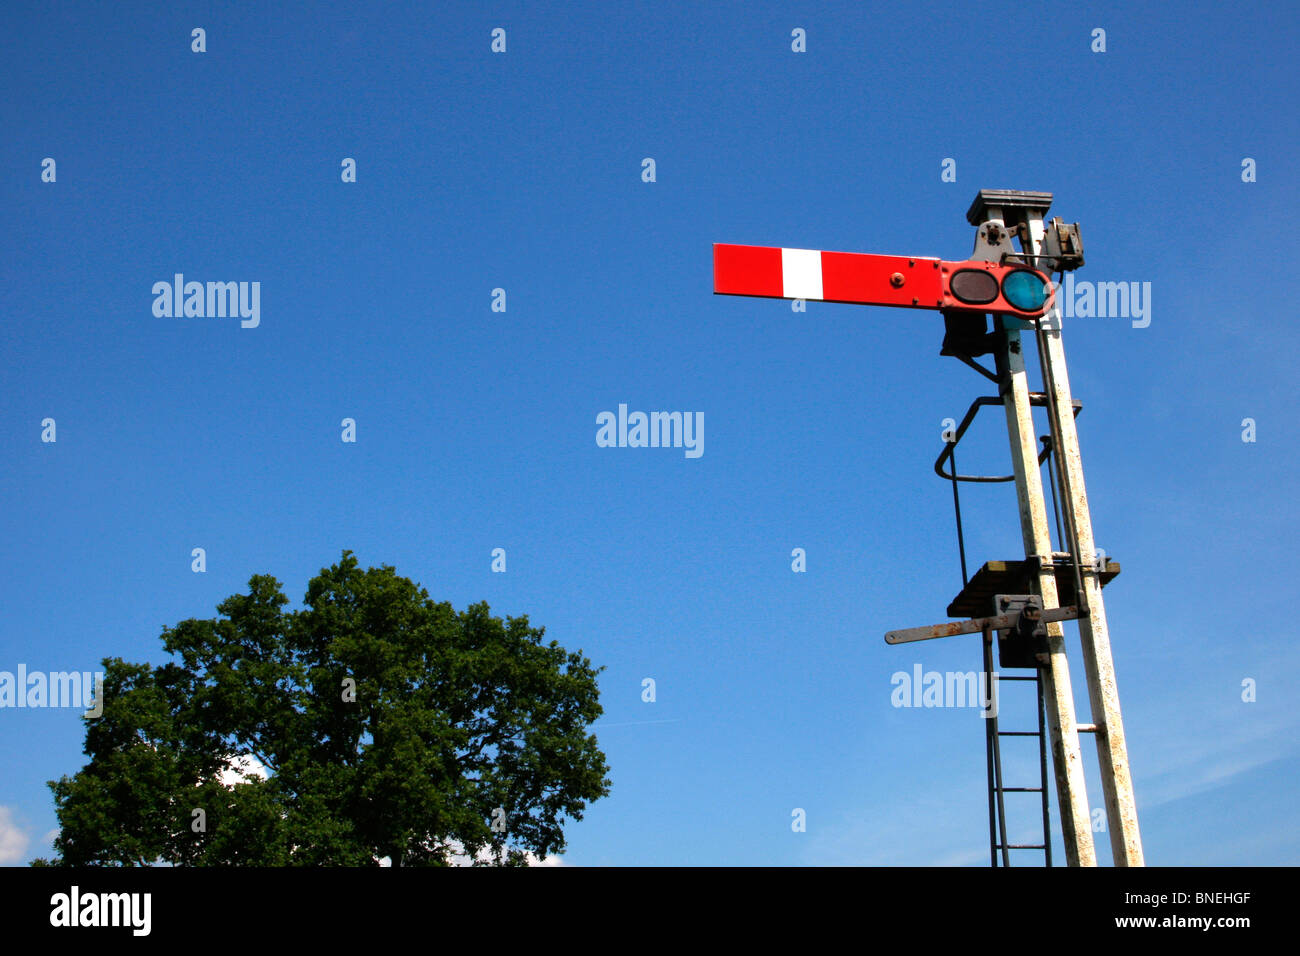 A railway semaphore signal and a tree. Stock Photo